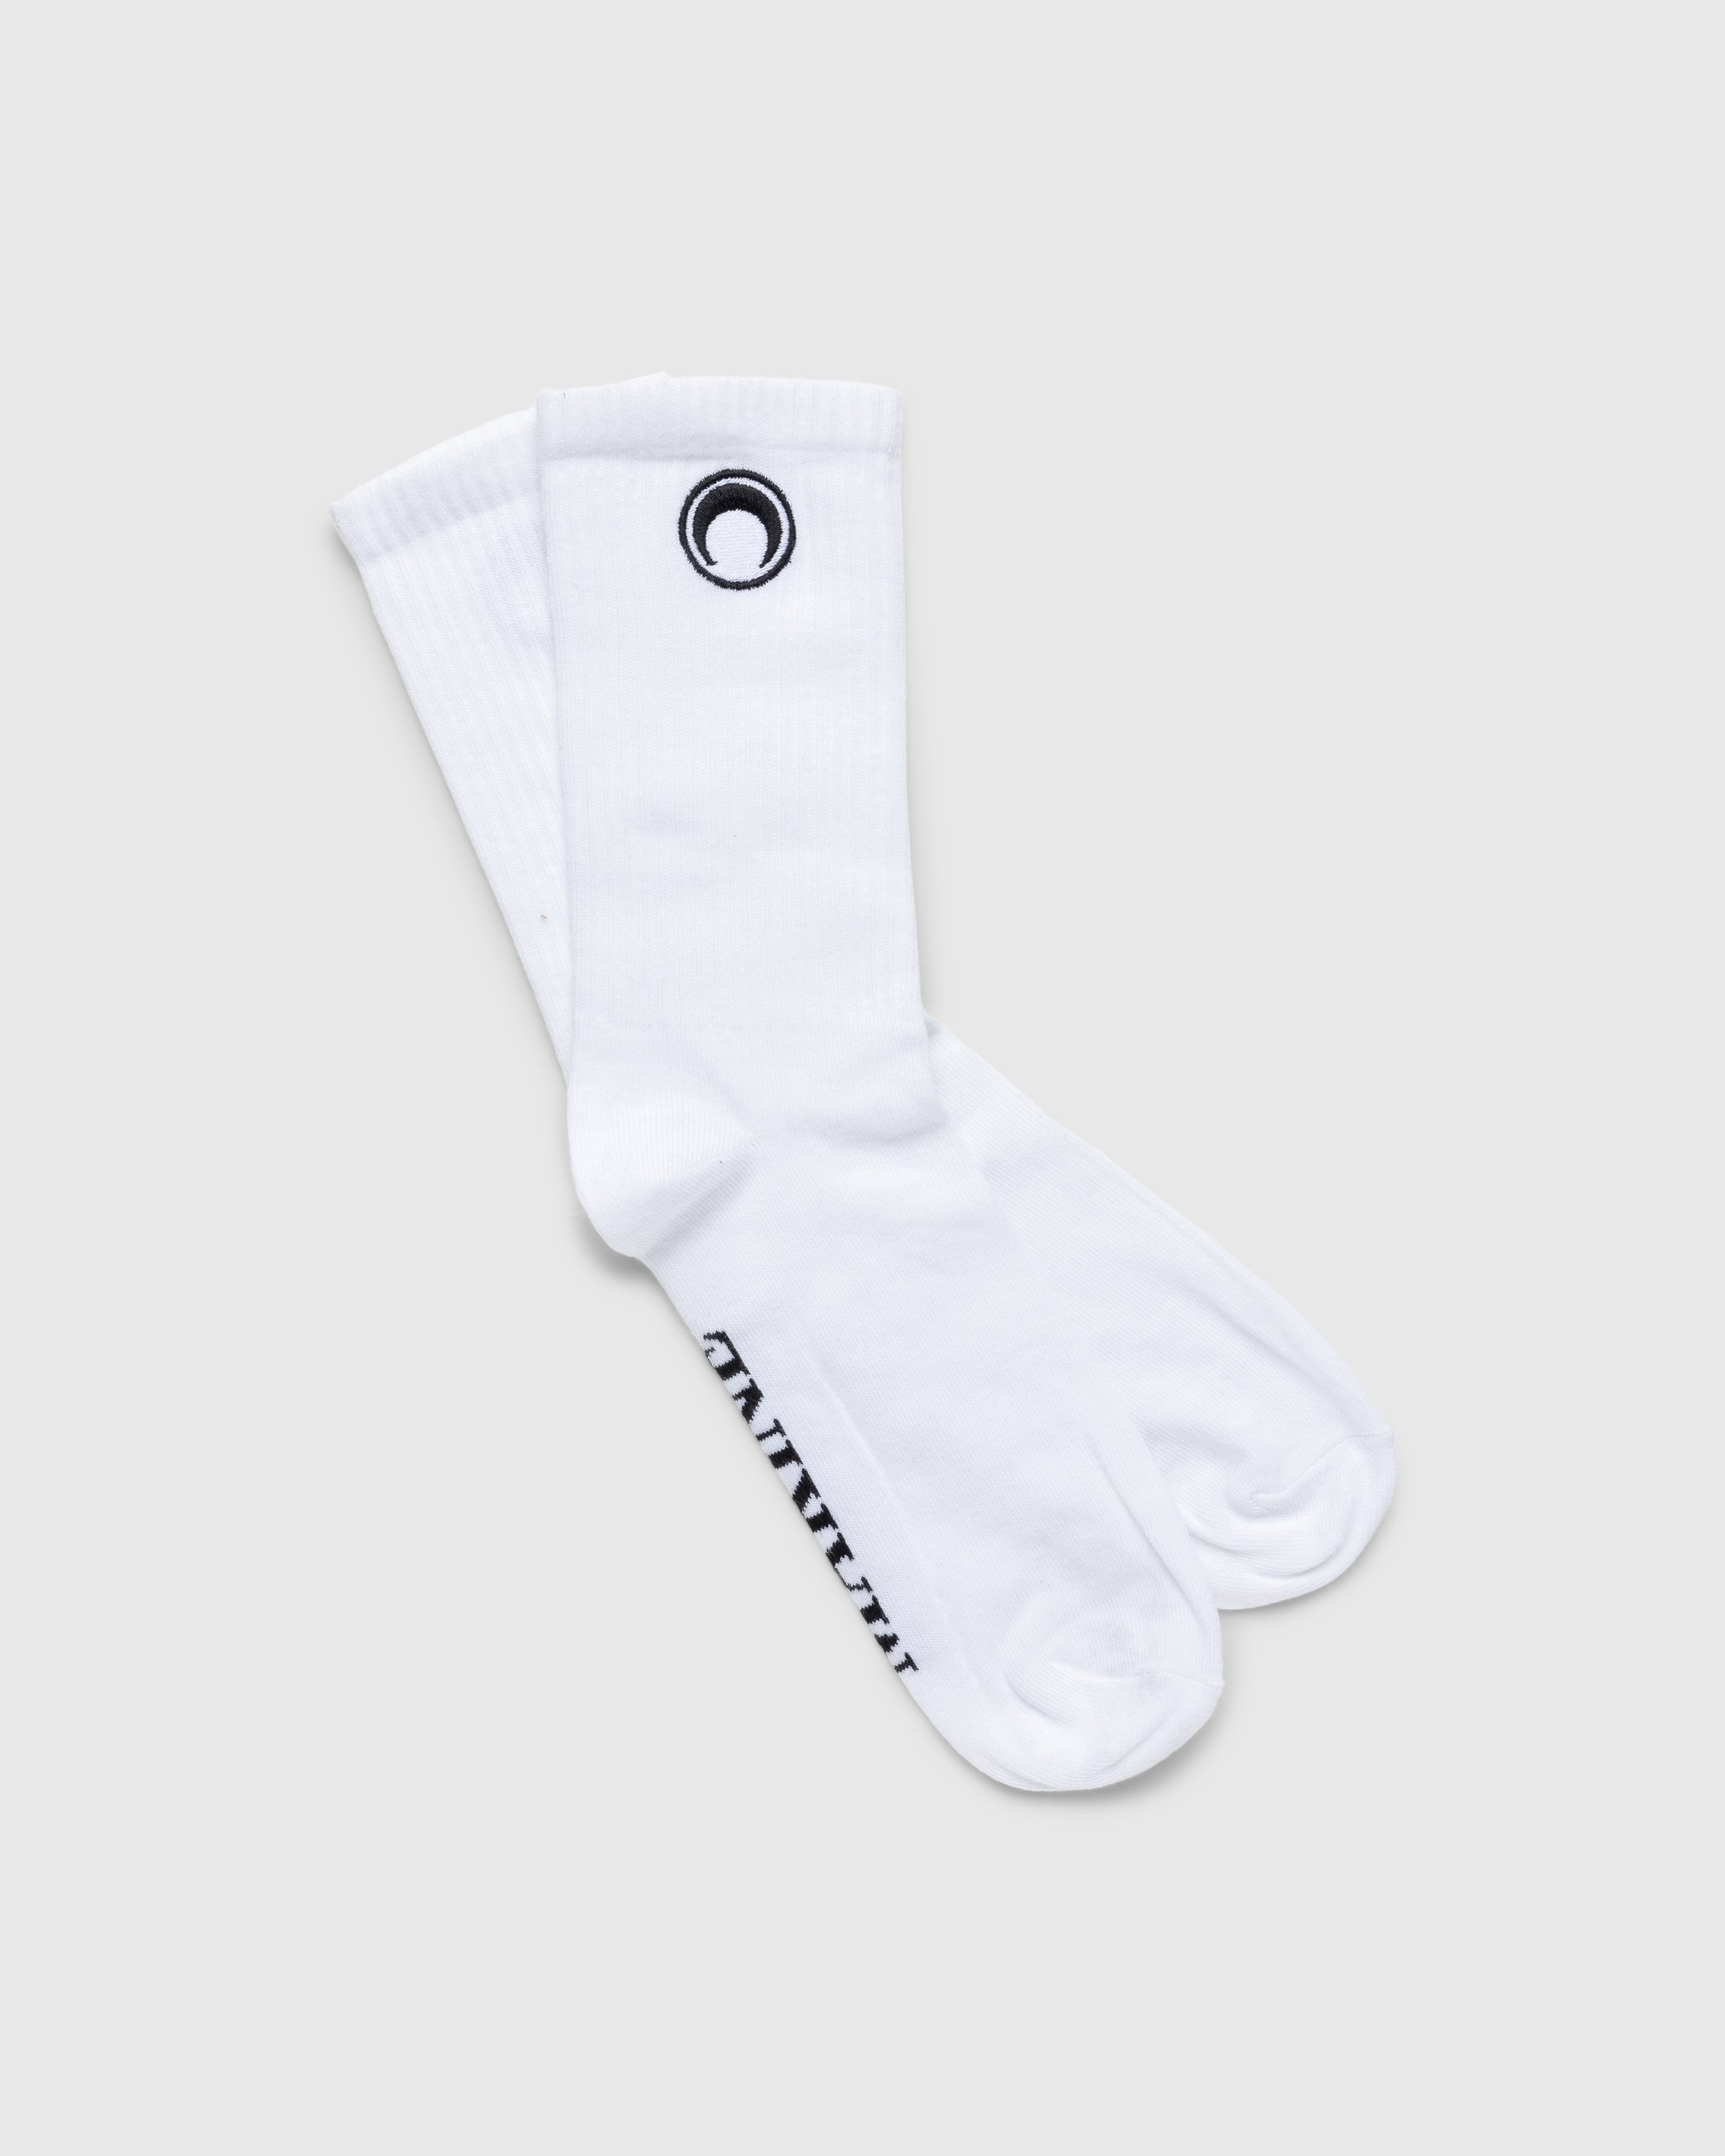 Marine Serre – Embroidered Olympic Socks White - Socks - White - Image 2